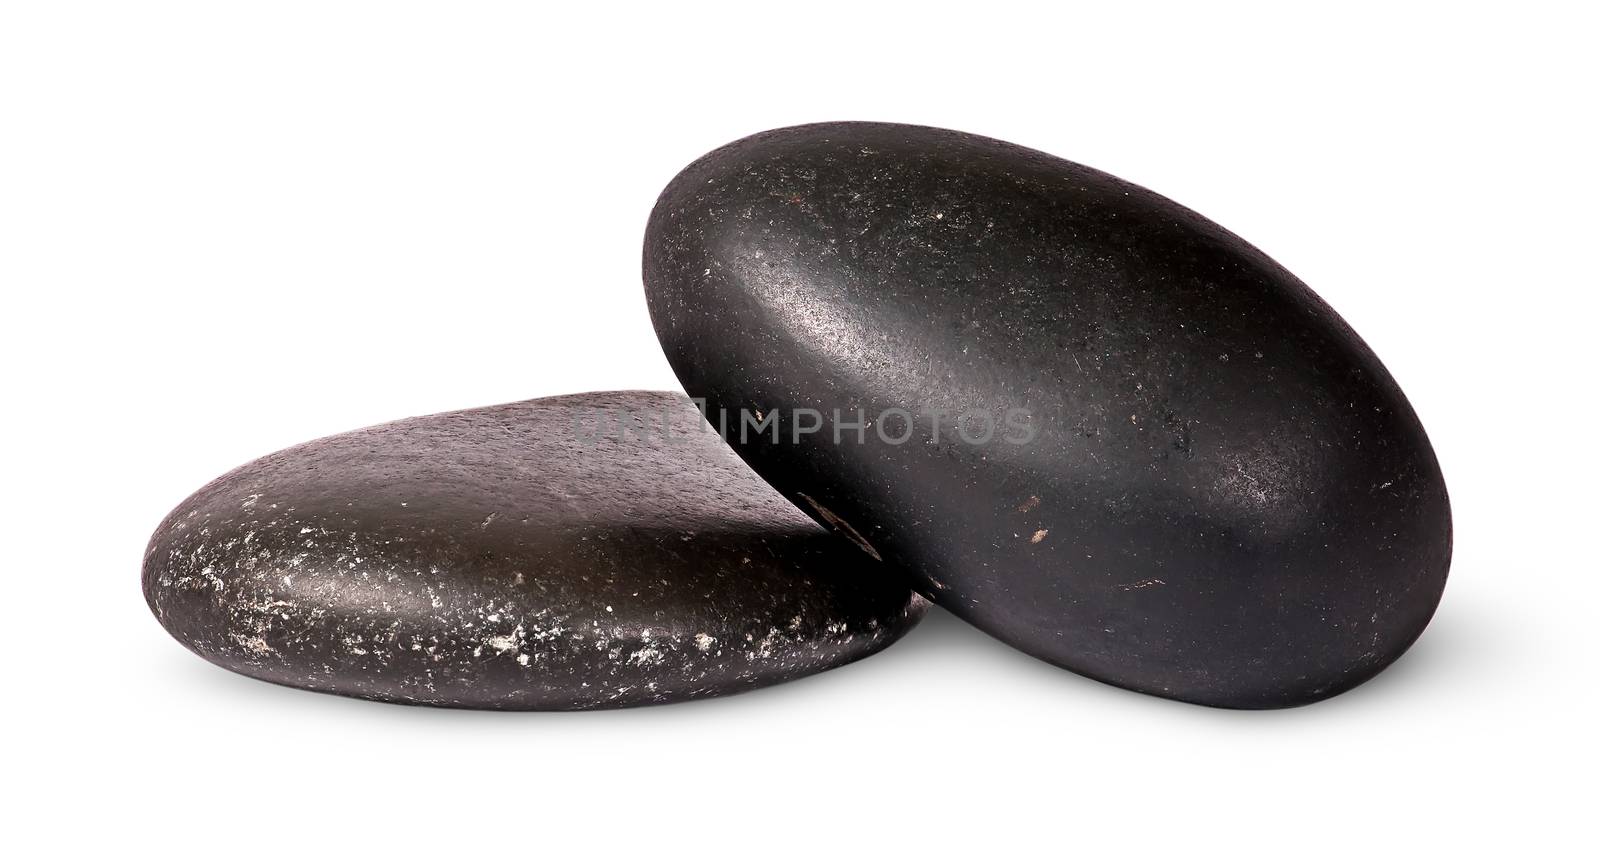 Two black stones for Thai spa by Cipariss